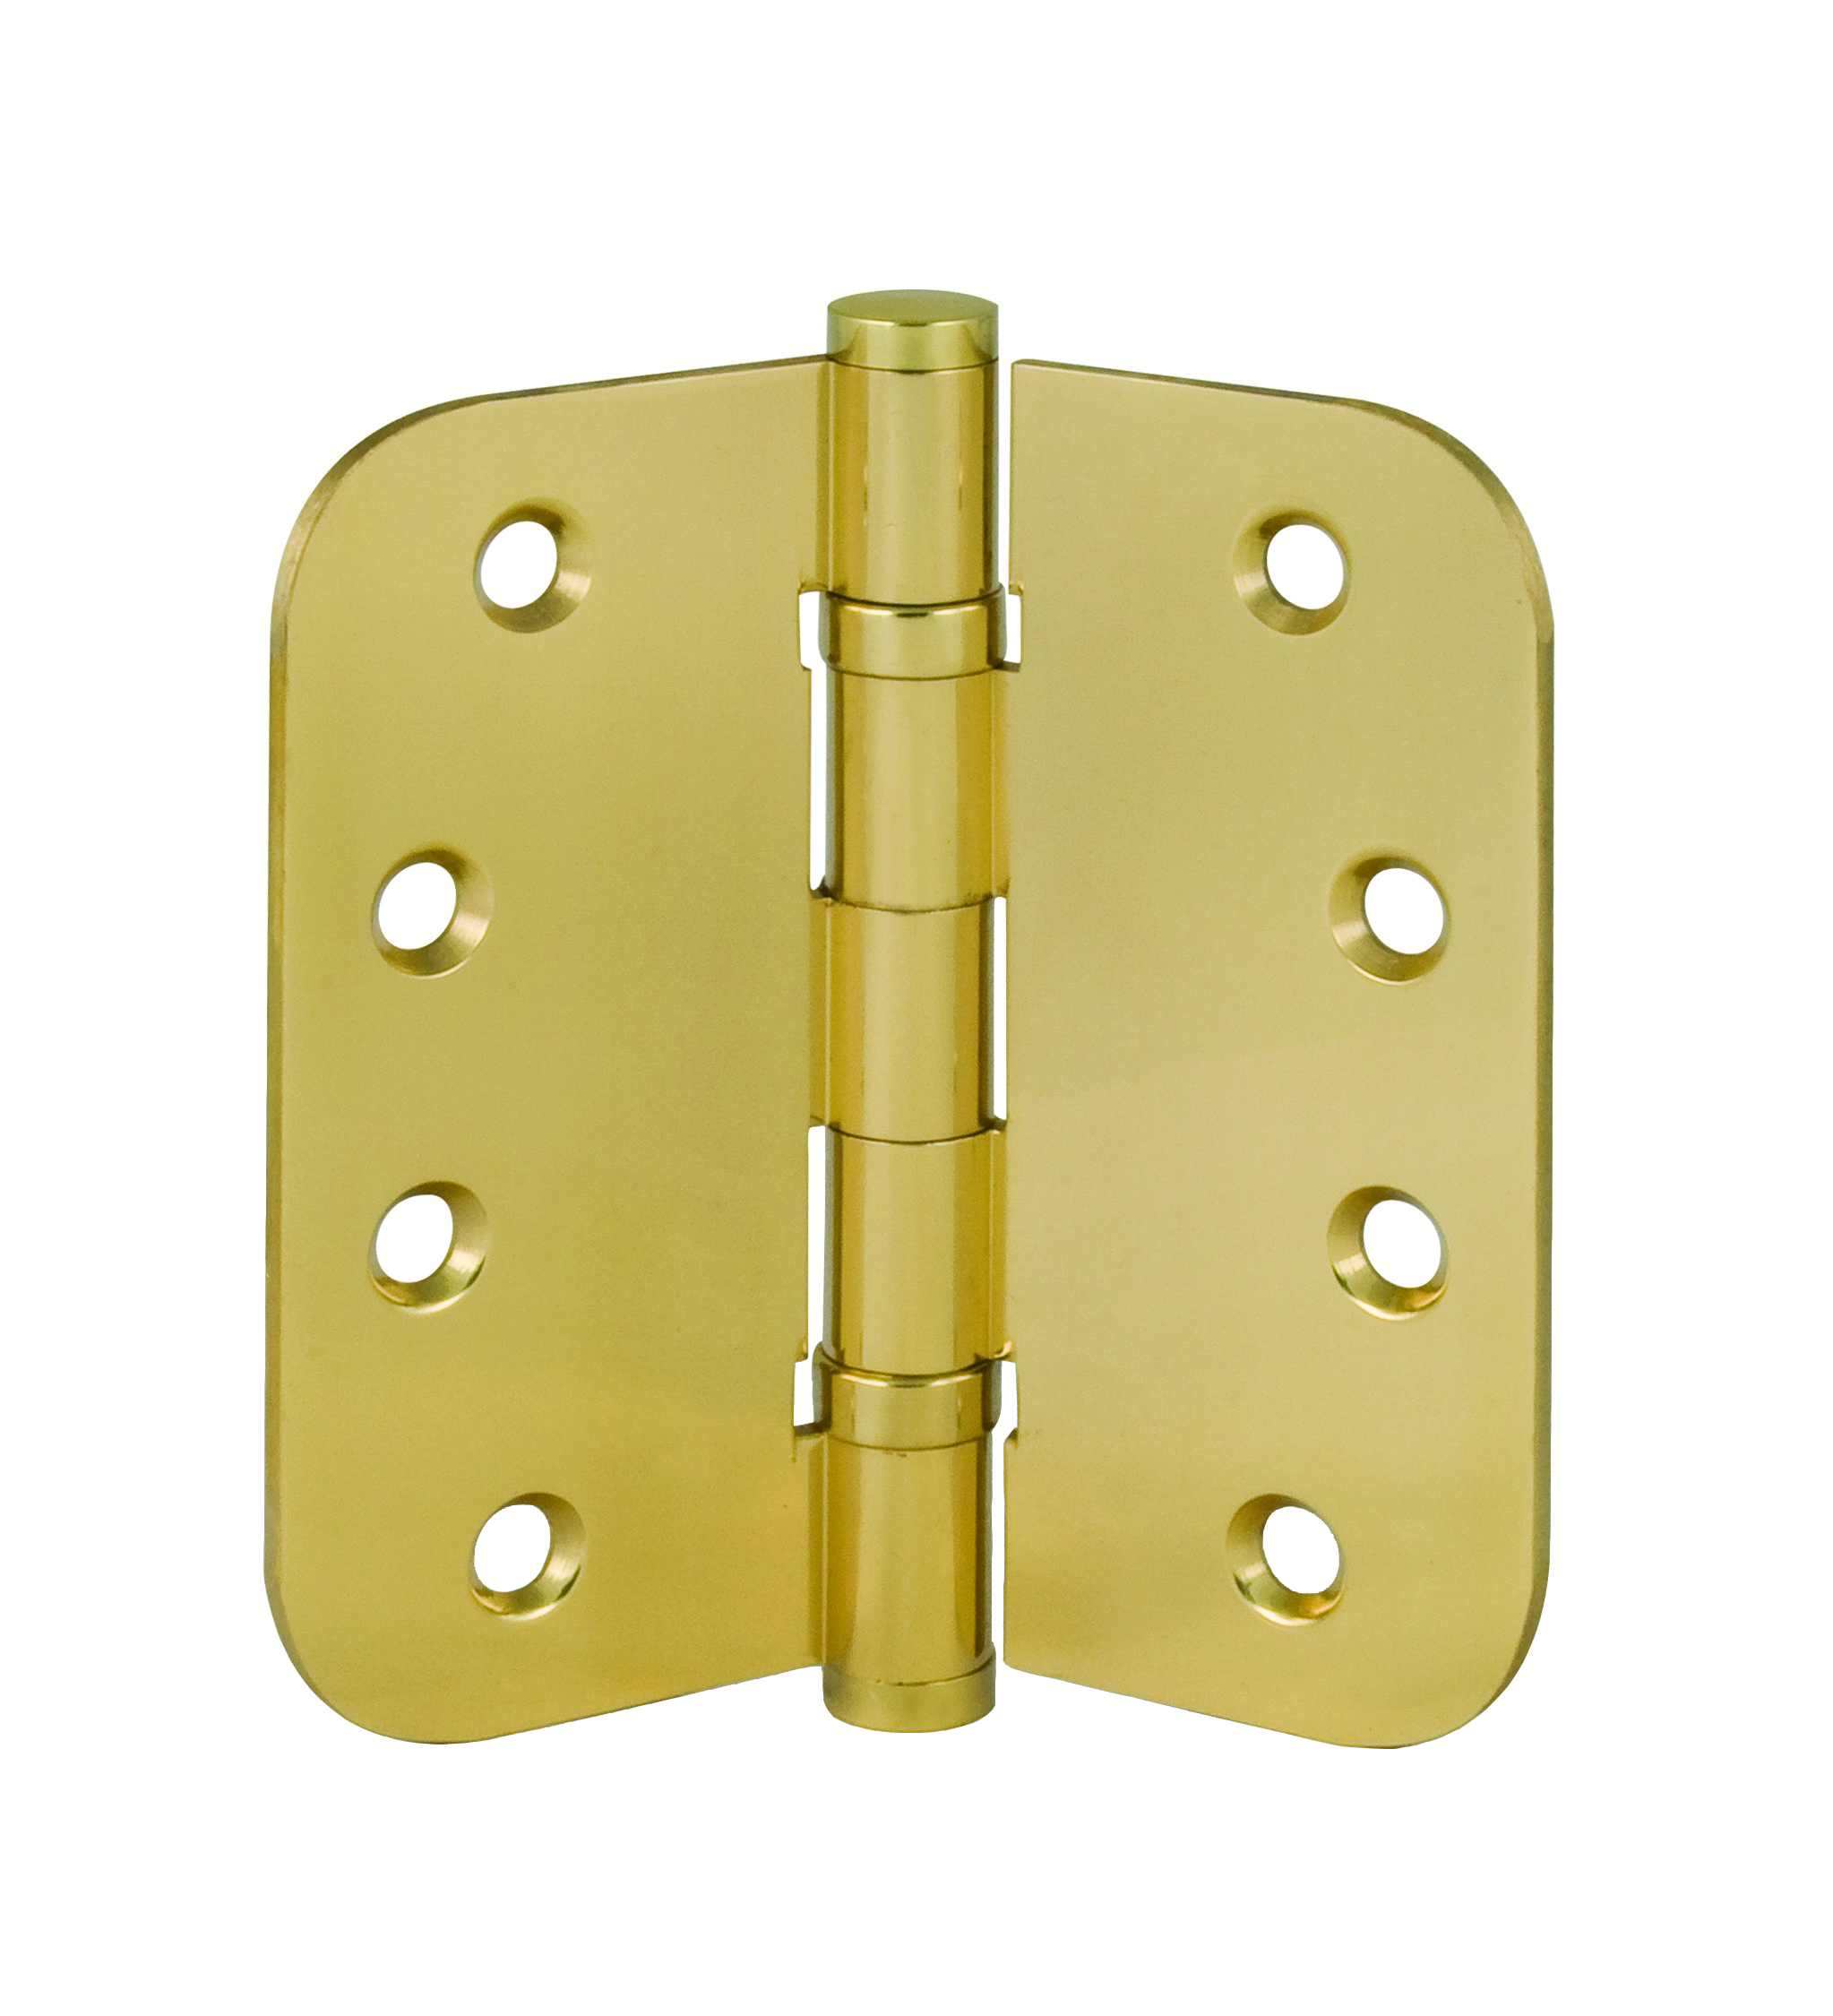 4″ x 5/8″ Solid Brass Hinge